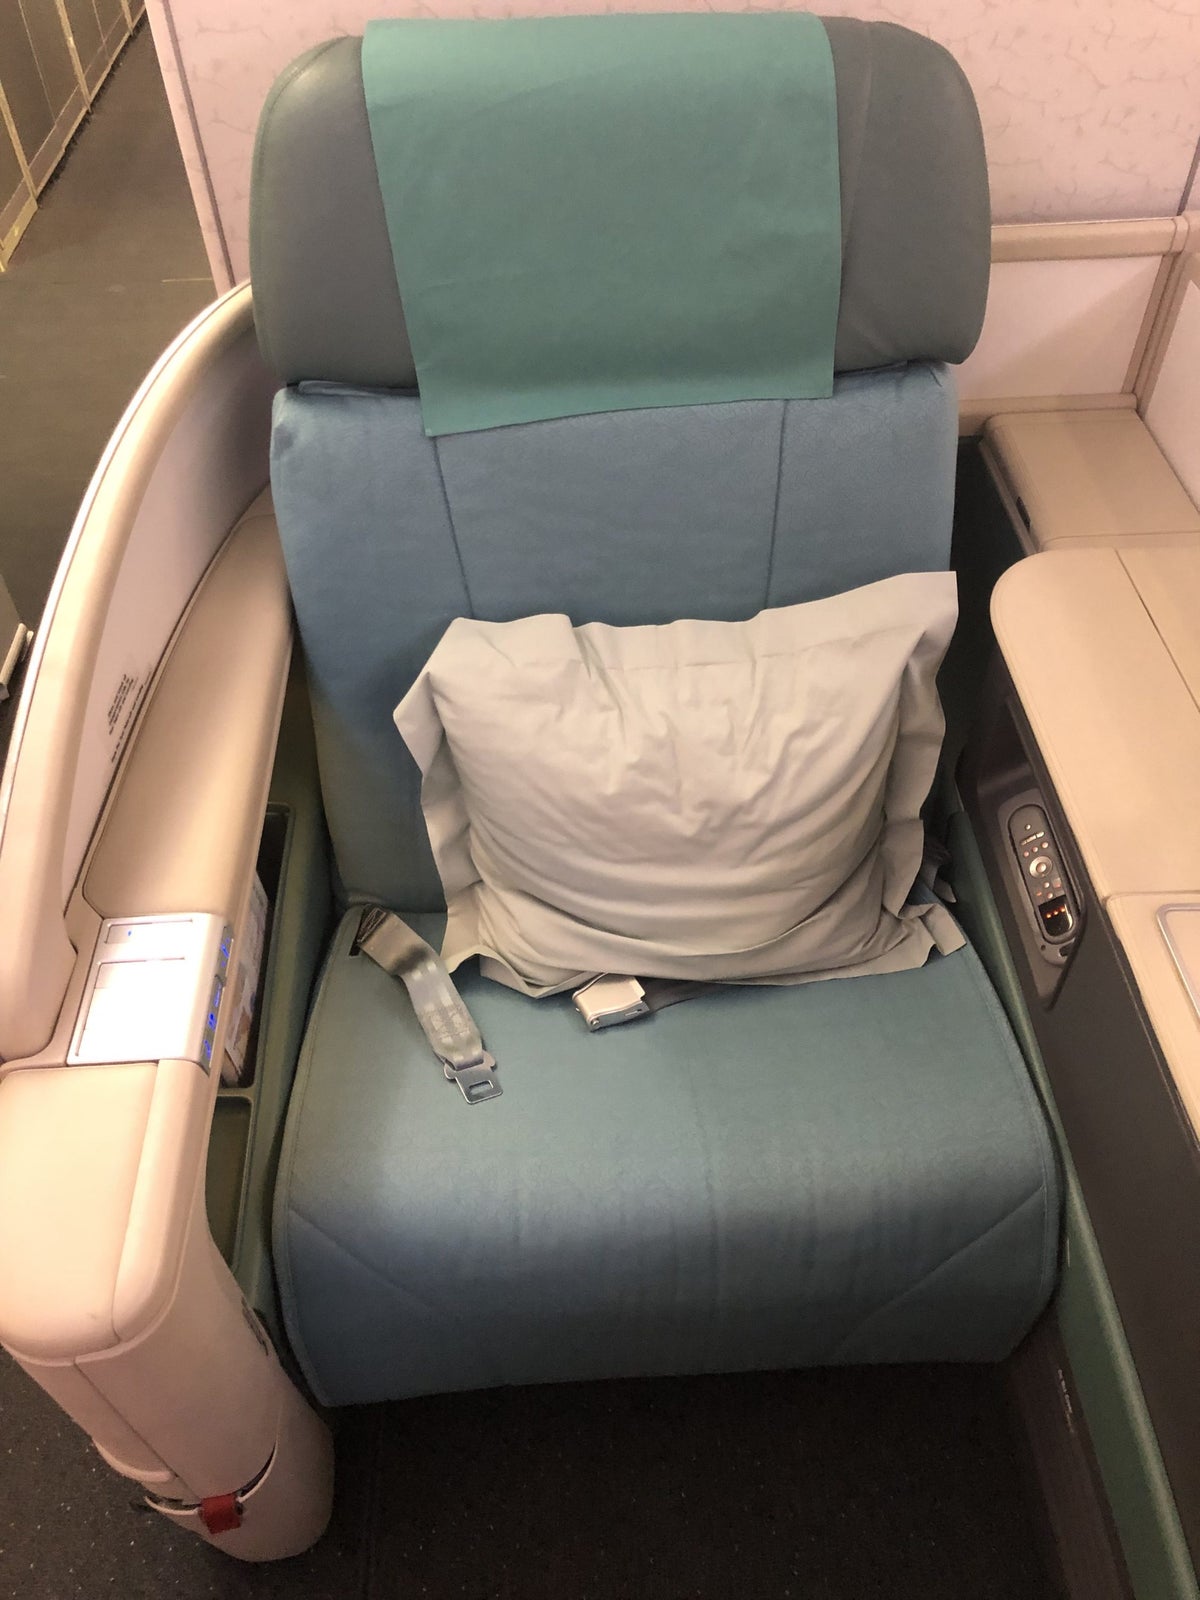 Korean Air first class seat close-up